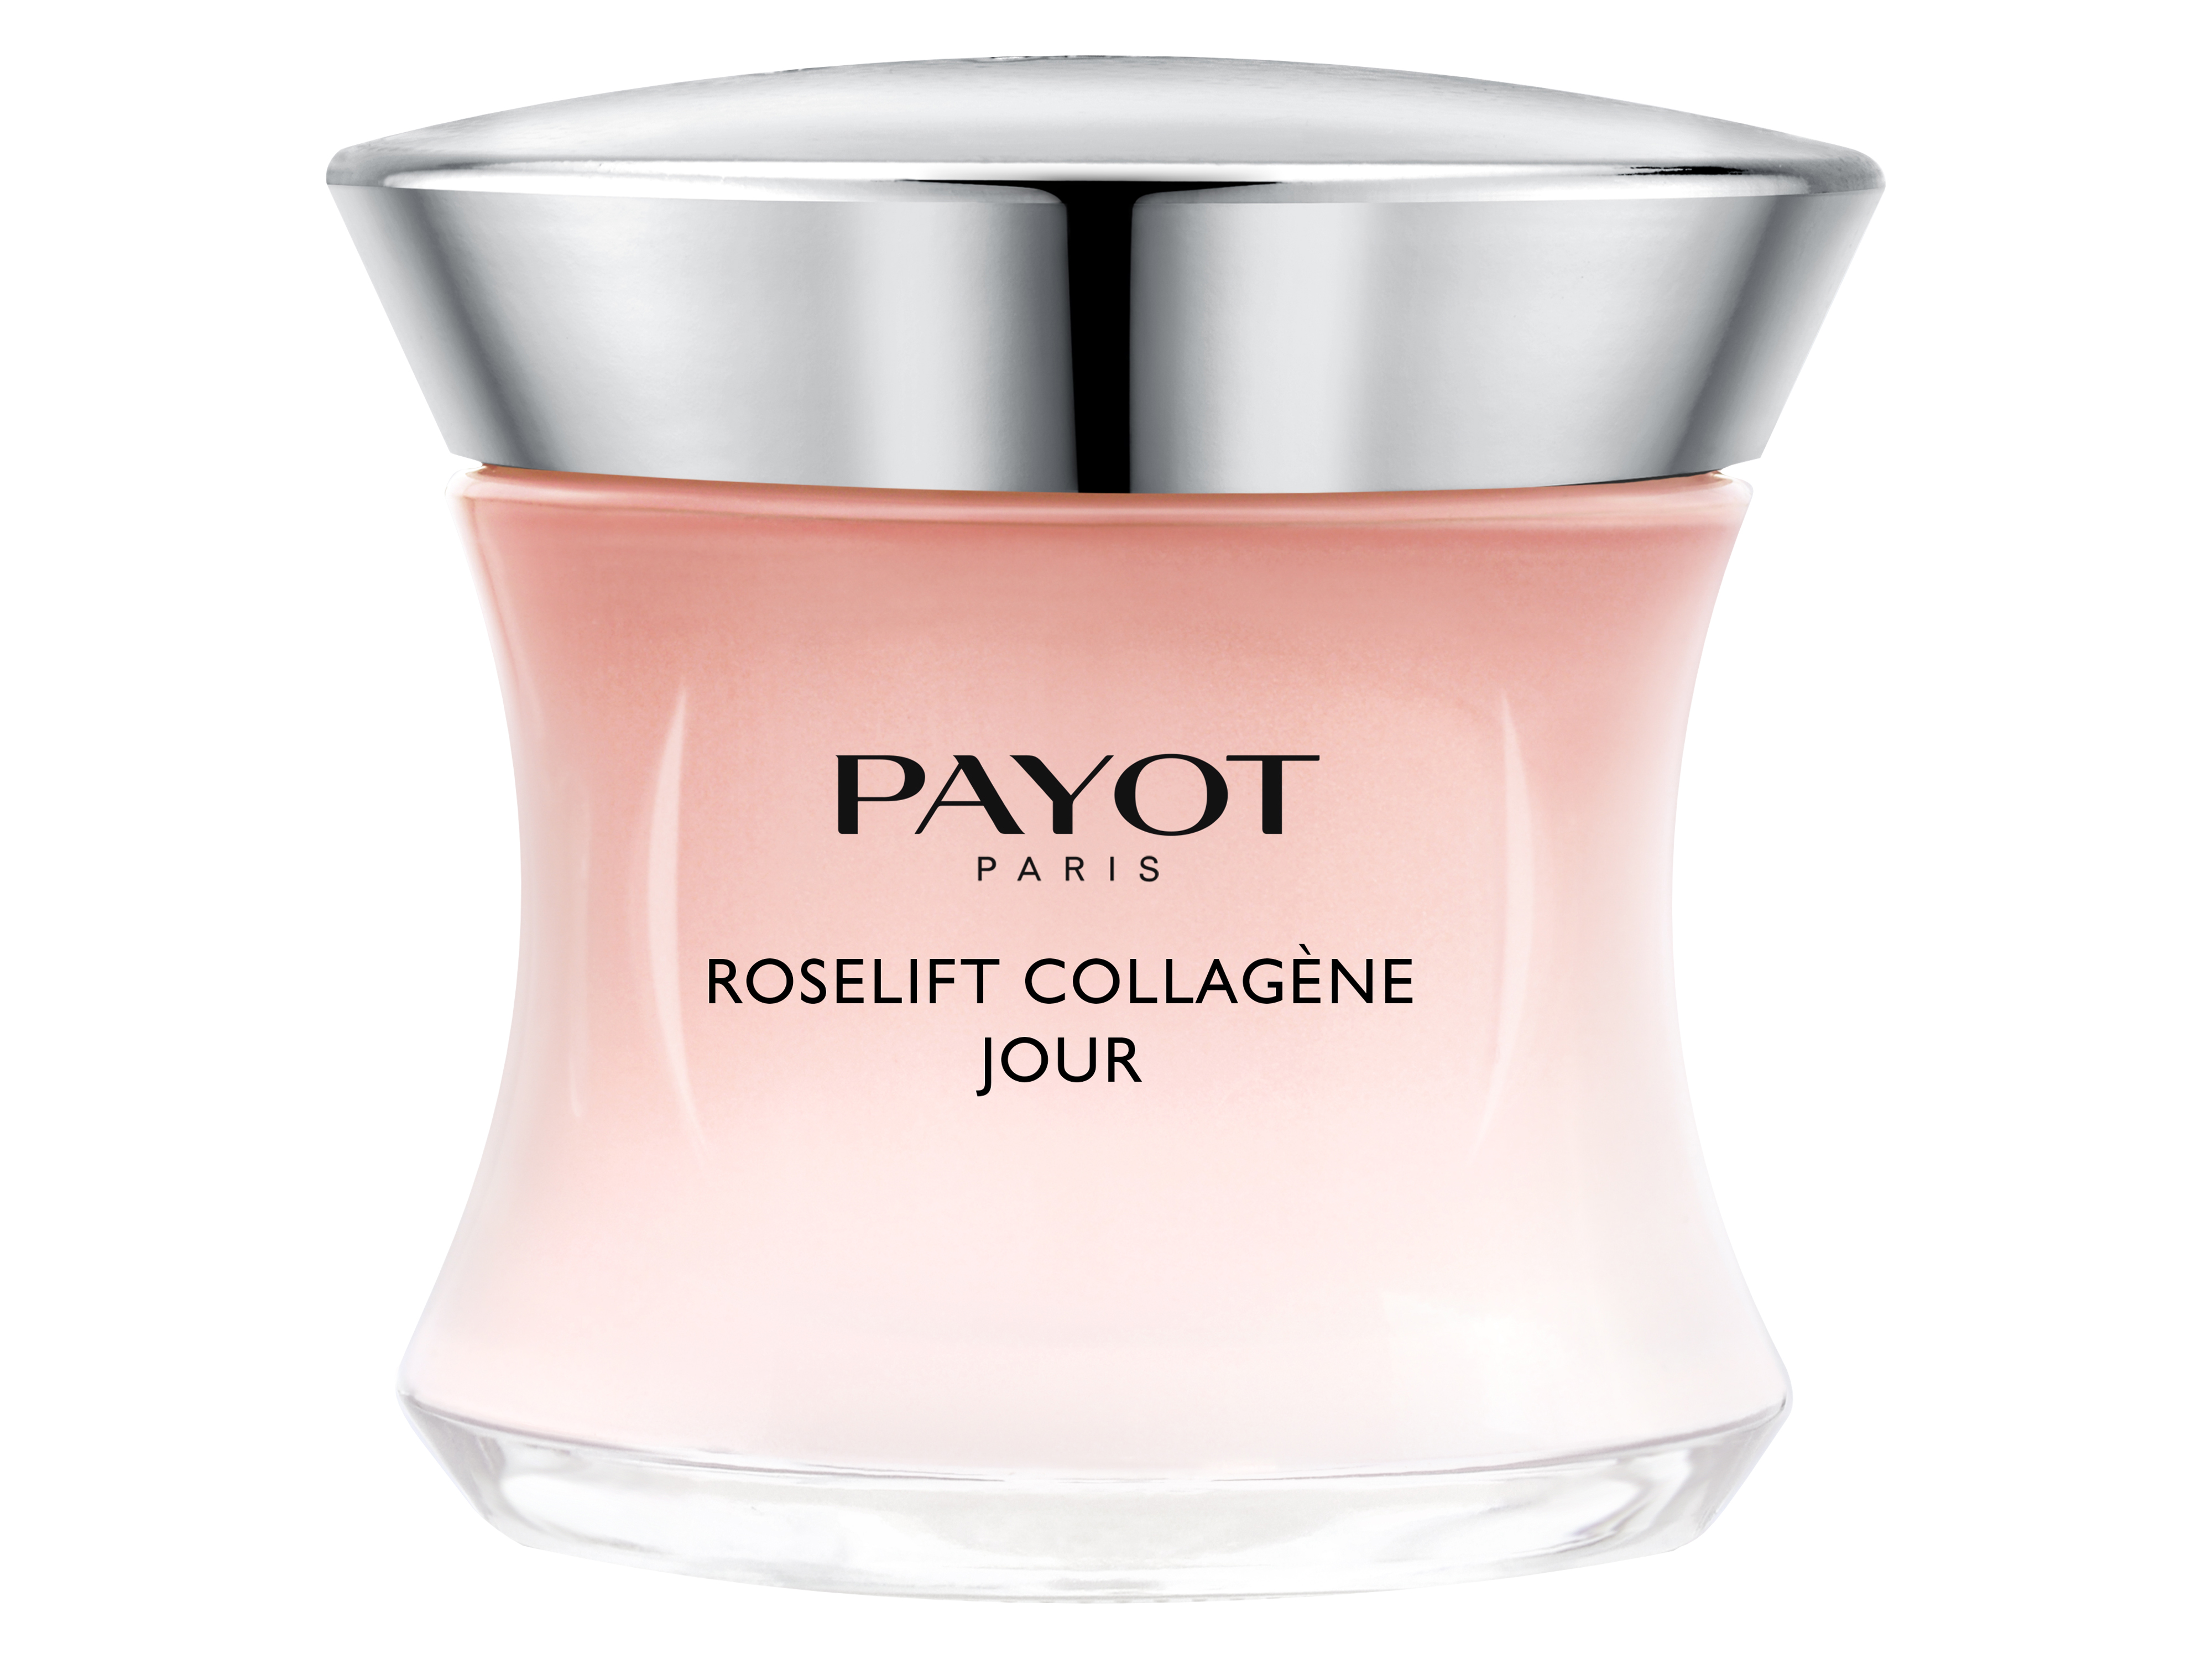 Payot Roselift Collagene Jour, 50 ml